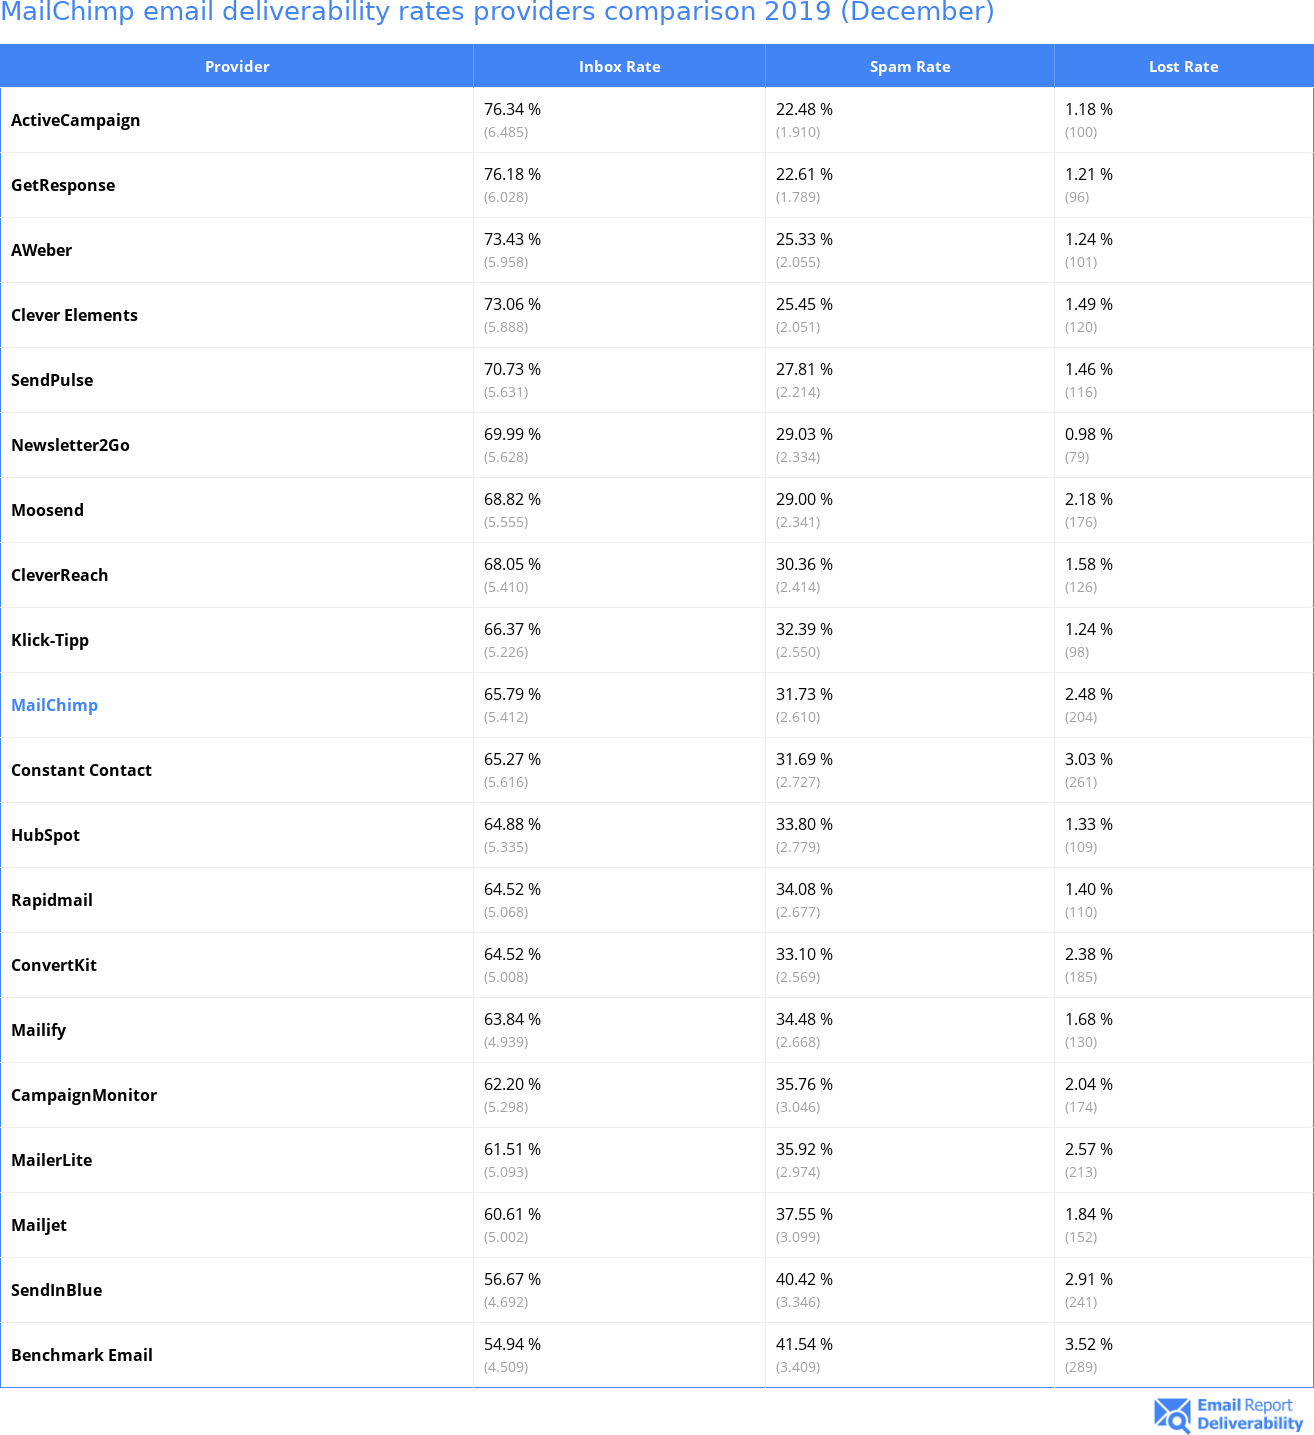 MailChimp email deliverability rates providers comparison 2019 (December)